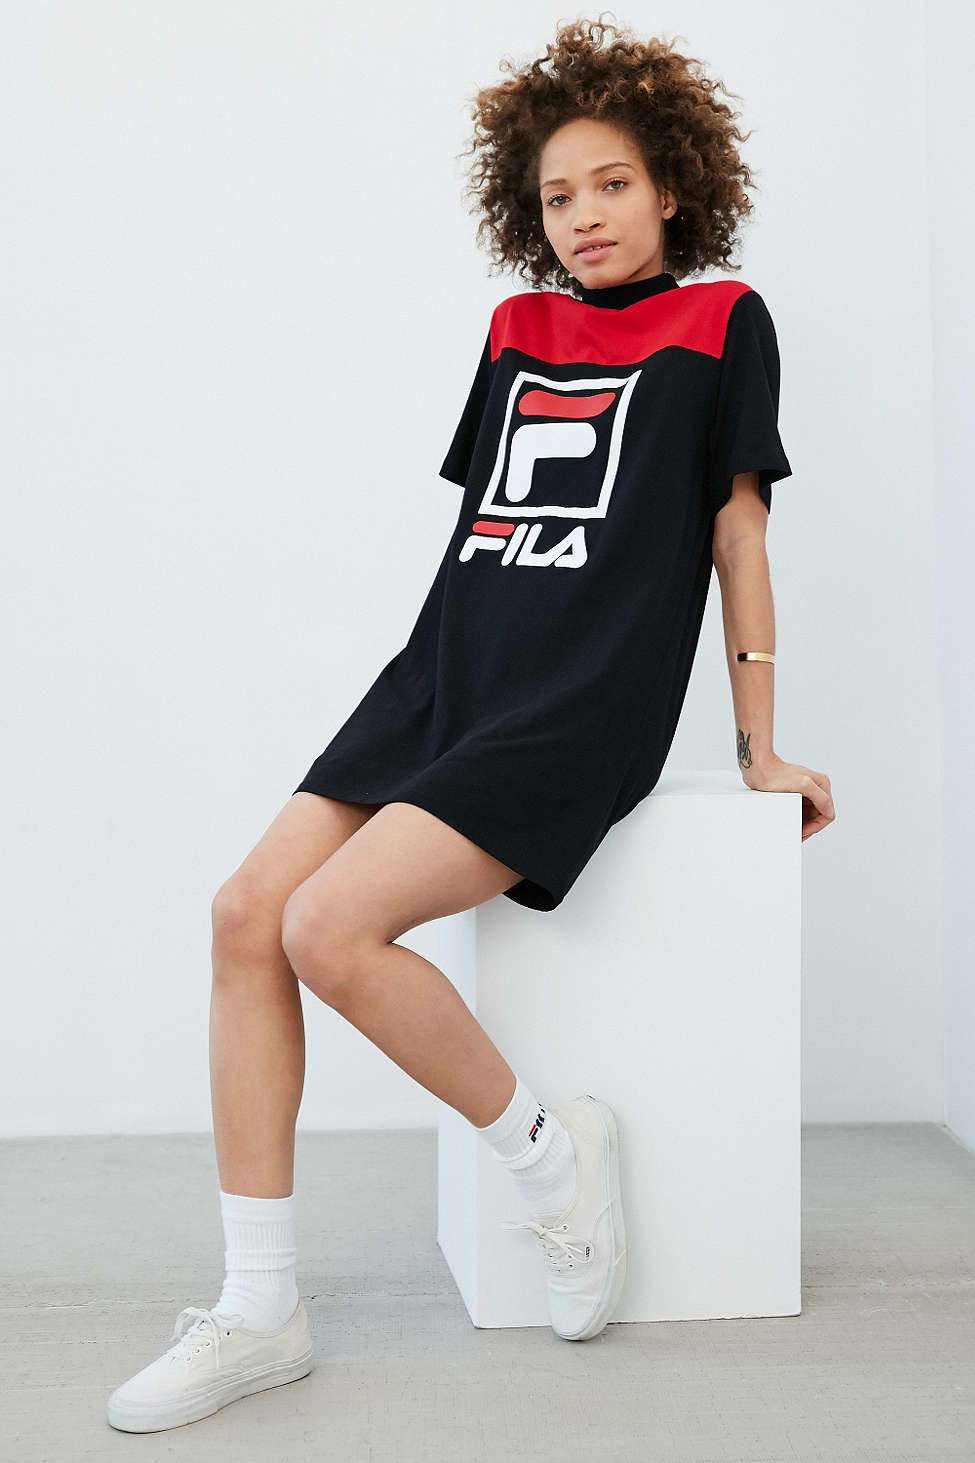 Fila Tee Shirt Dress Best Sale, SAVE 40% - catchtalent.com